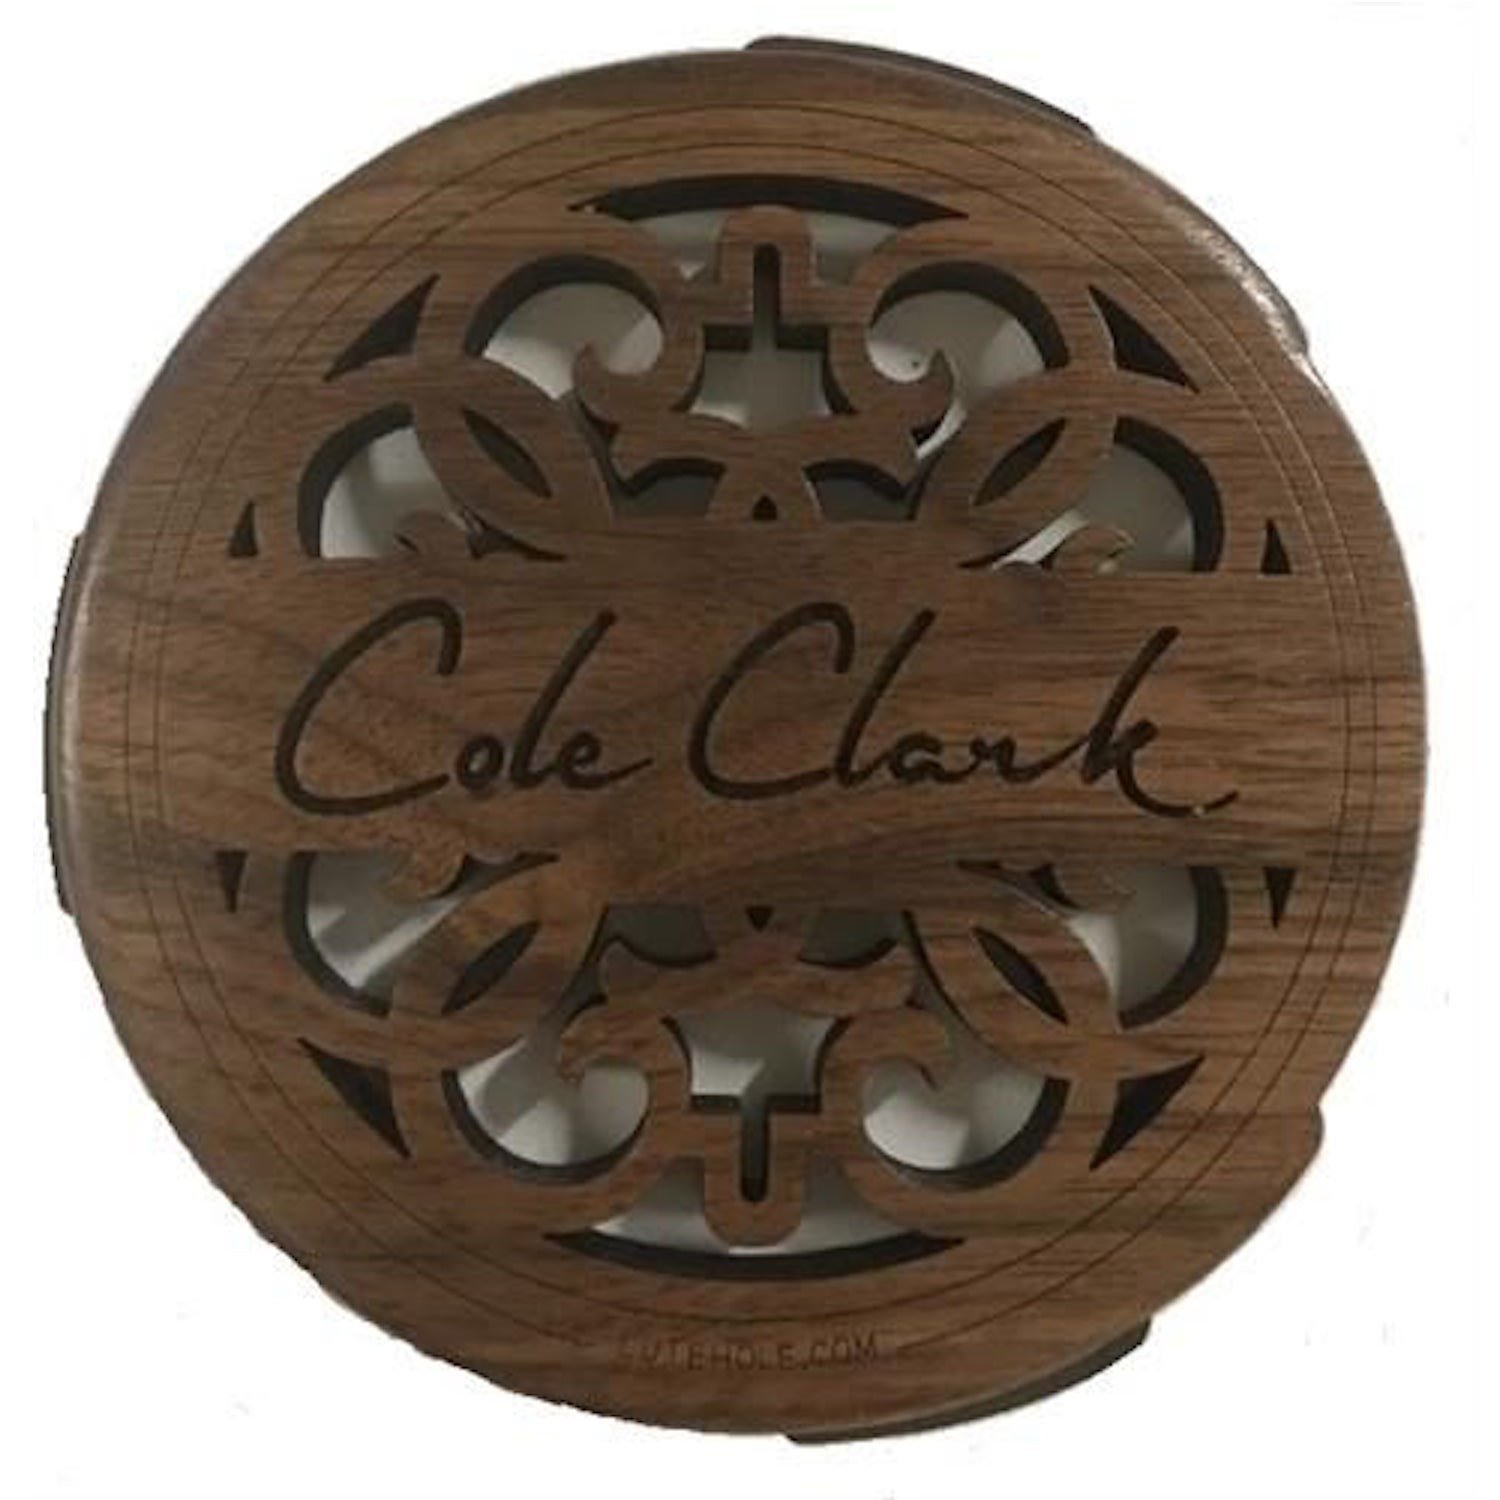 Cole Clark Lutehole Angel 106 Walnut